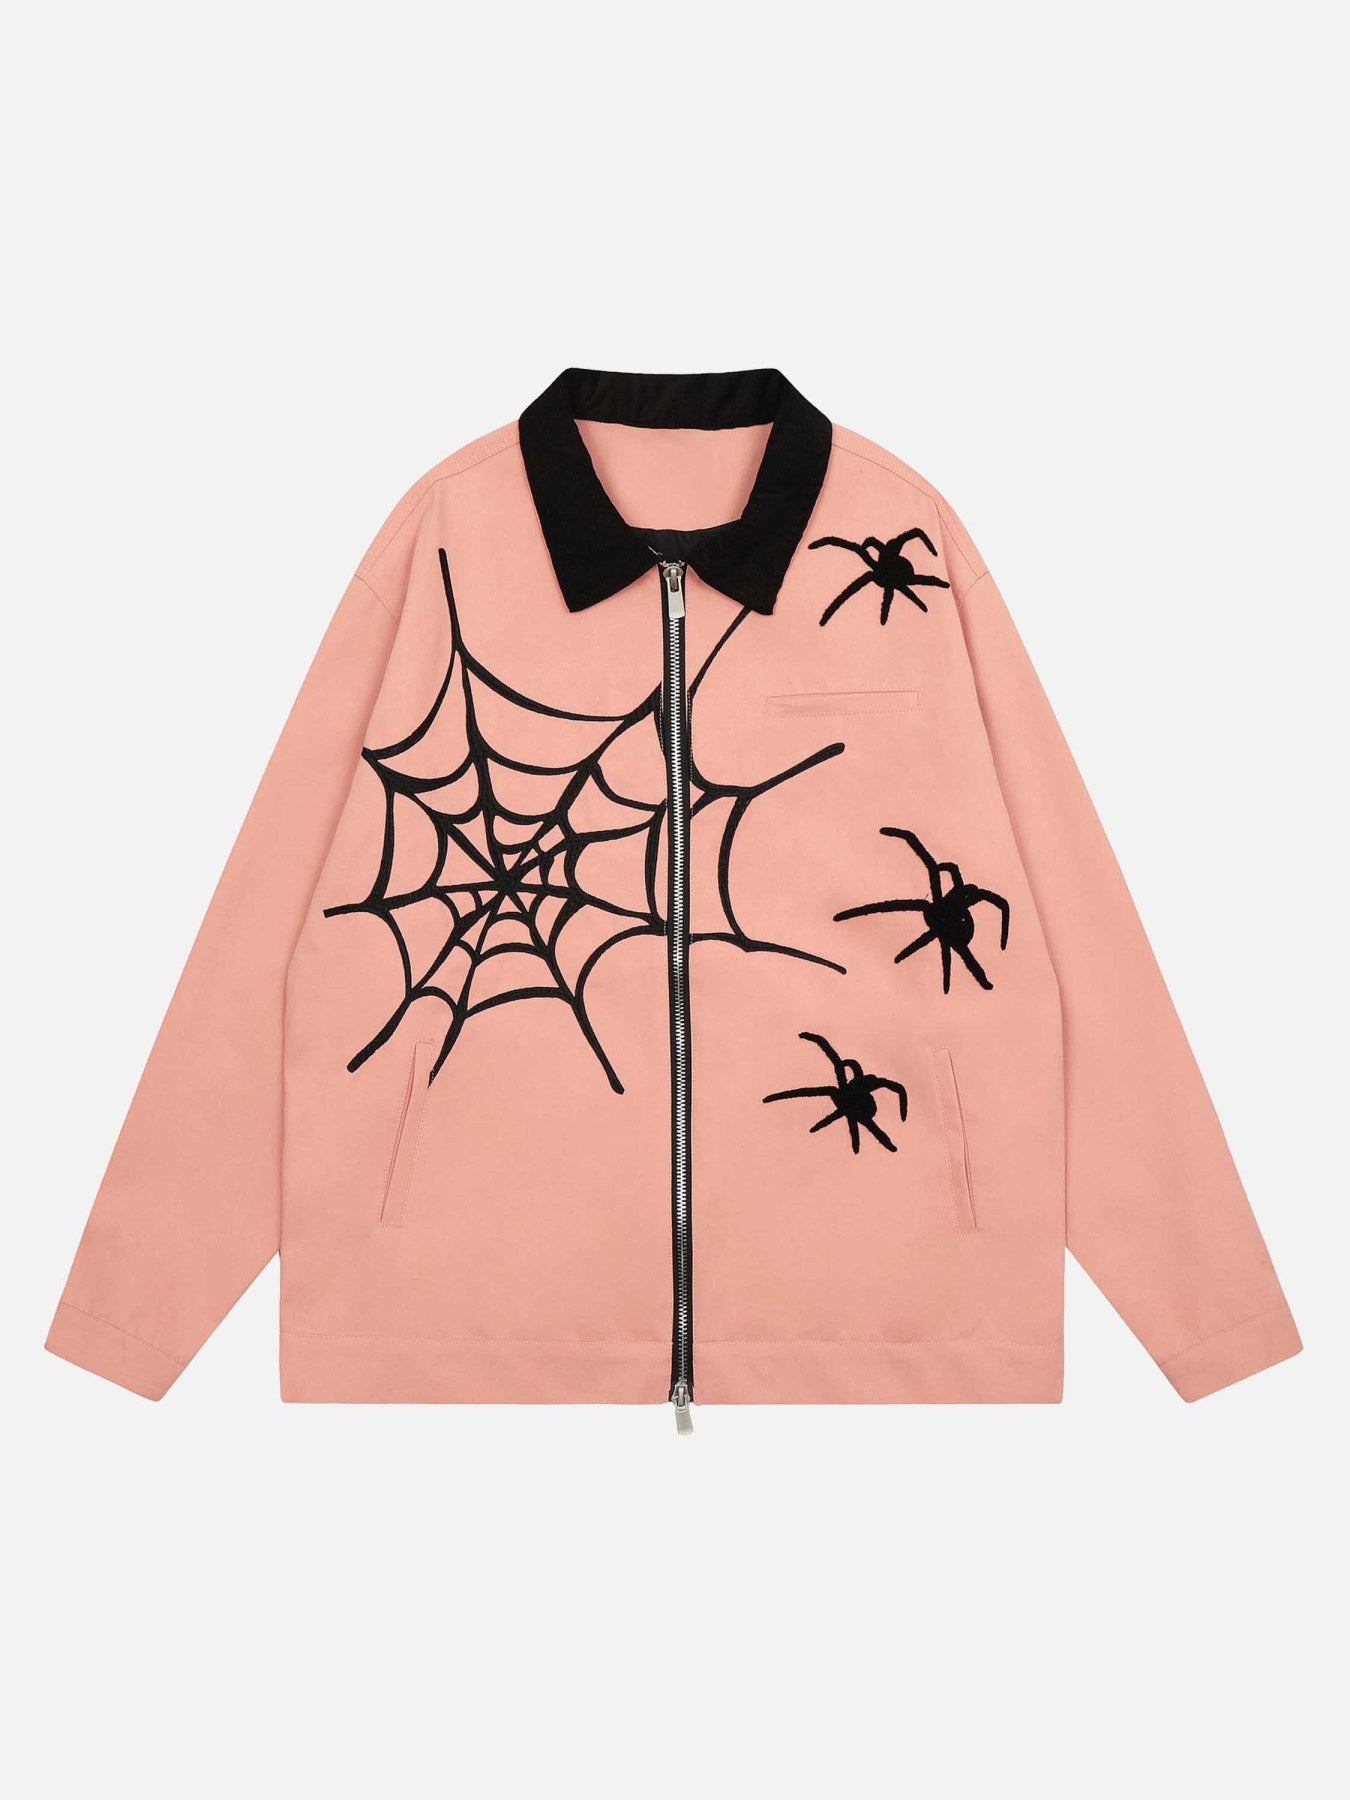 The Supermade Large Spider Web Embroidered Denim Jacket